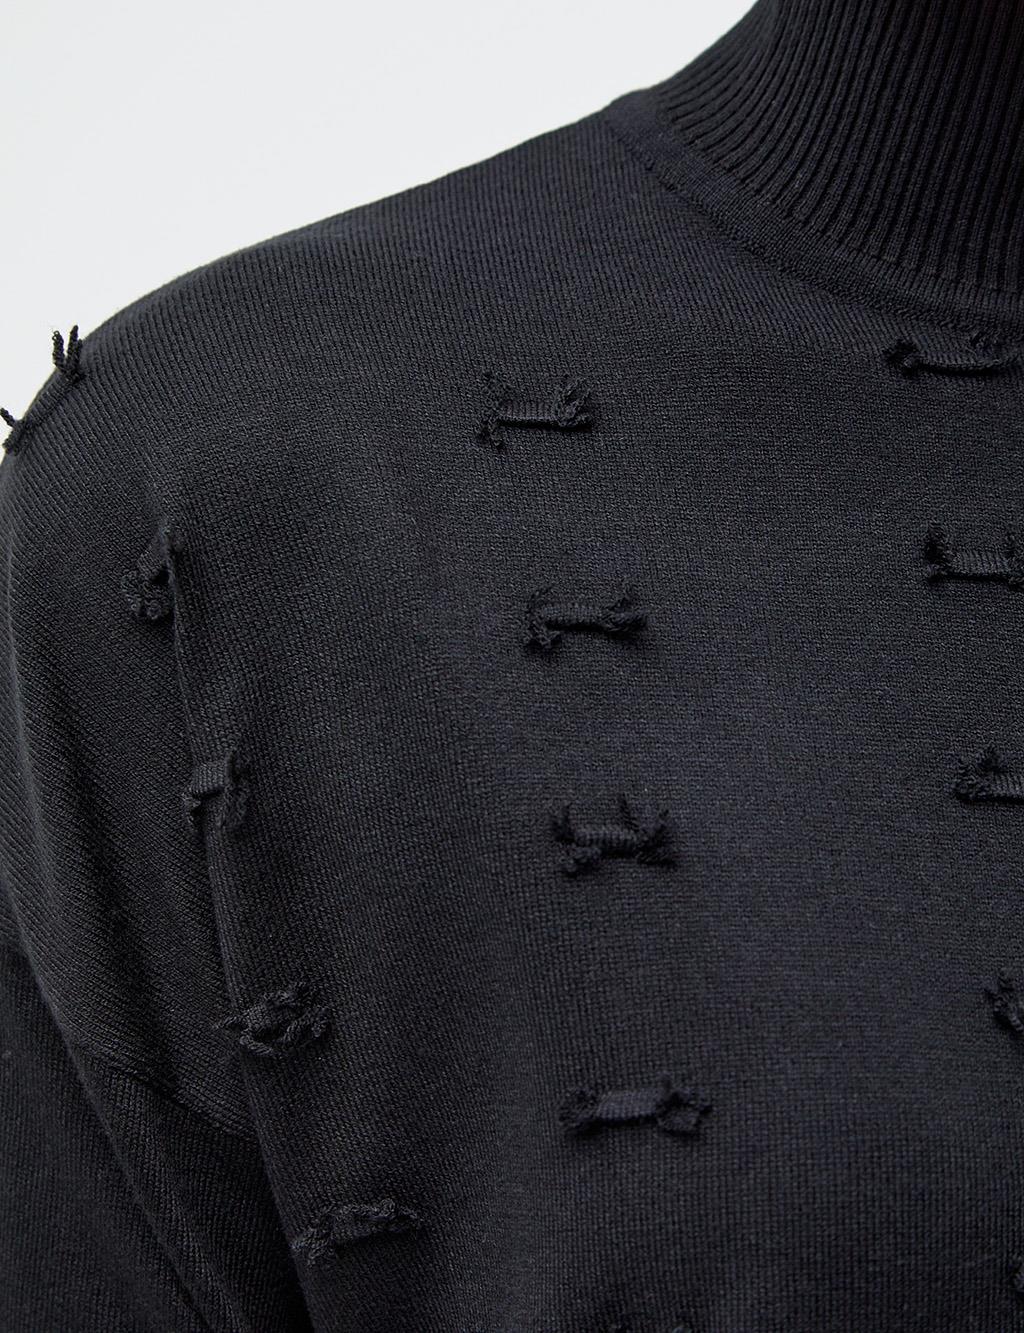 Decorative Tasseled Knitwear Tunic Black